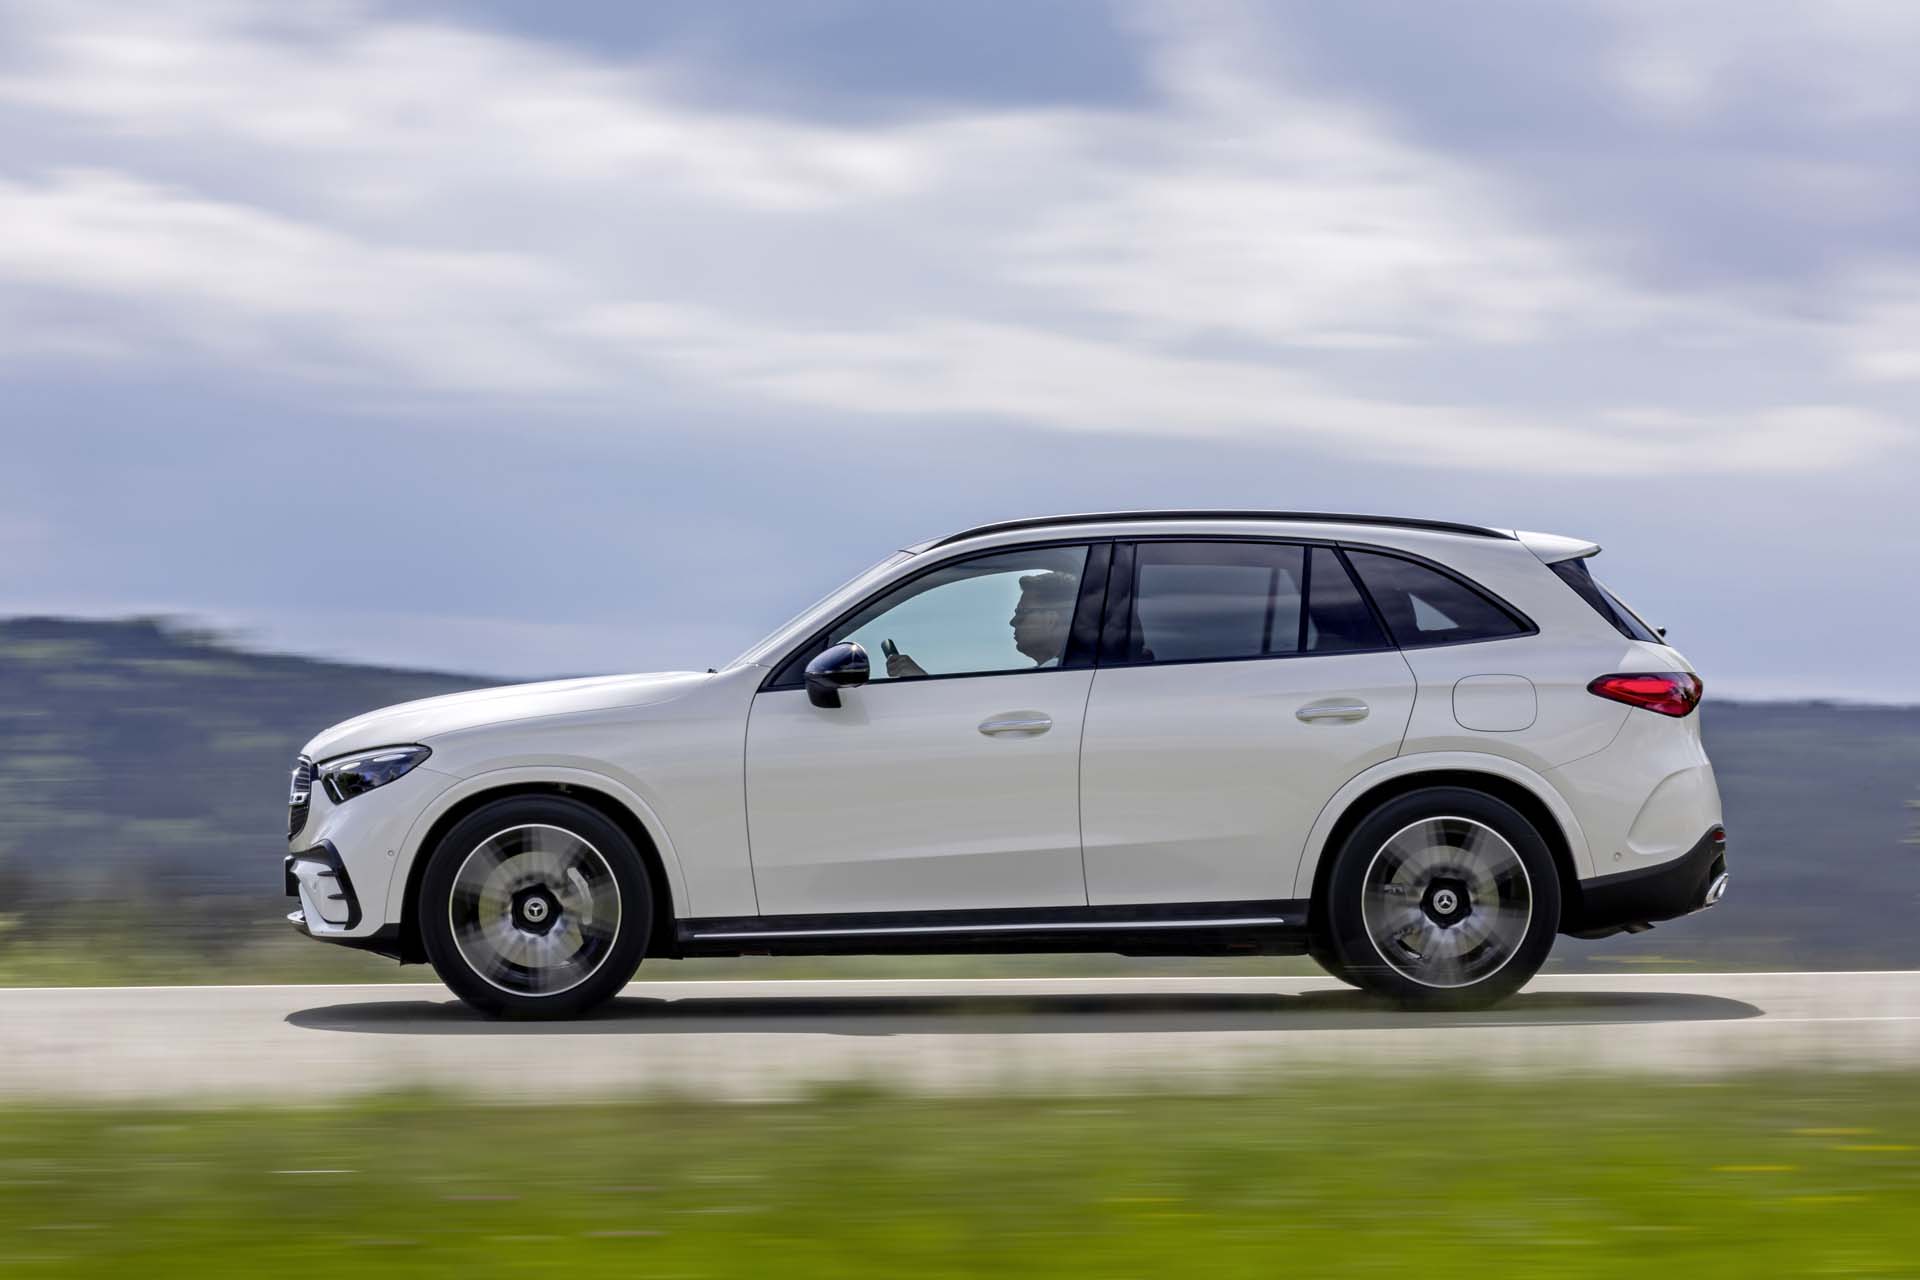 2023 Mercedes-Benz GLC, EQE SUV top this week’s new car news